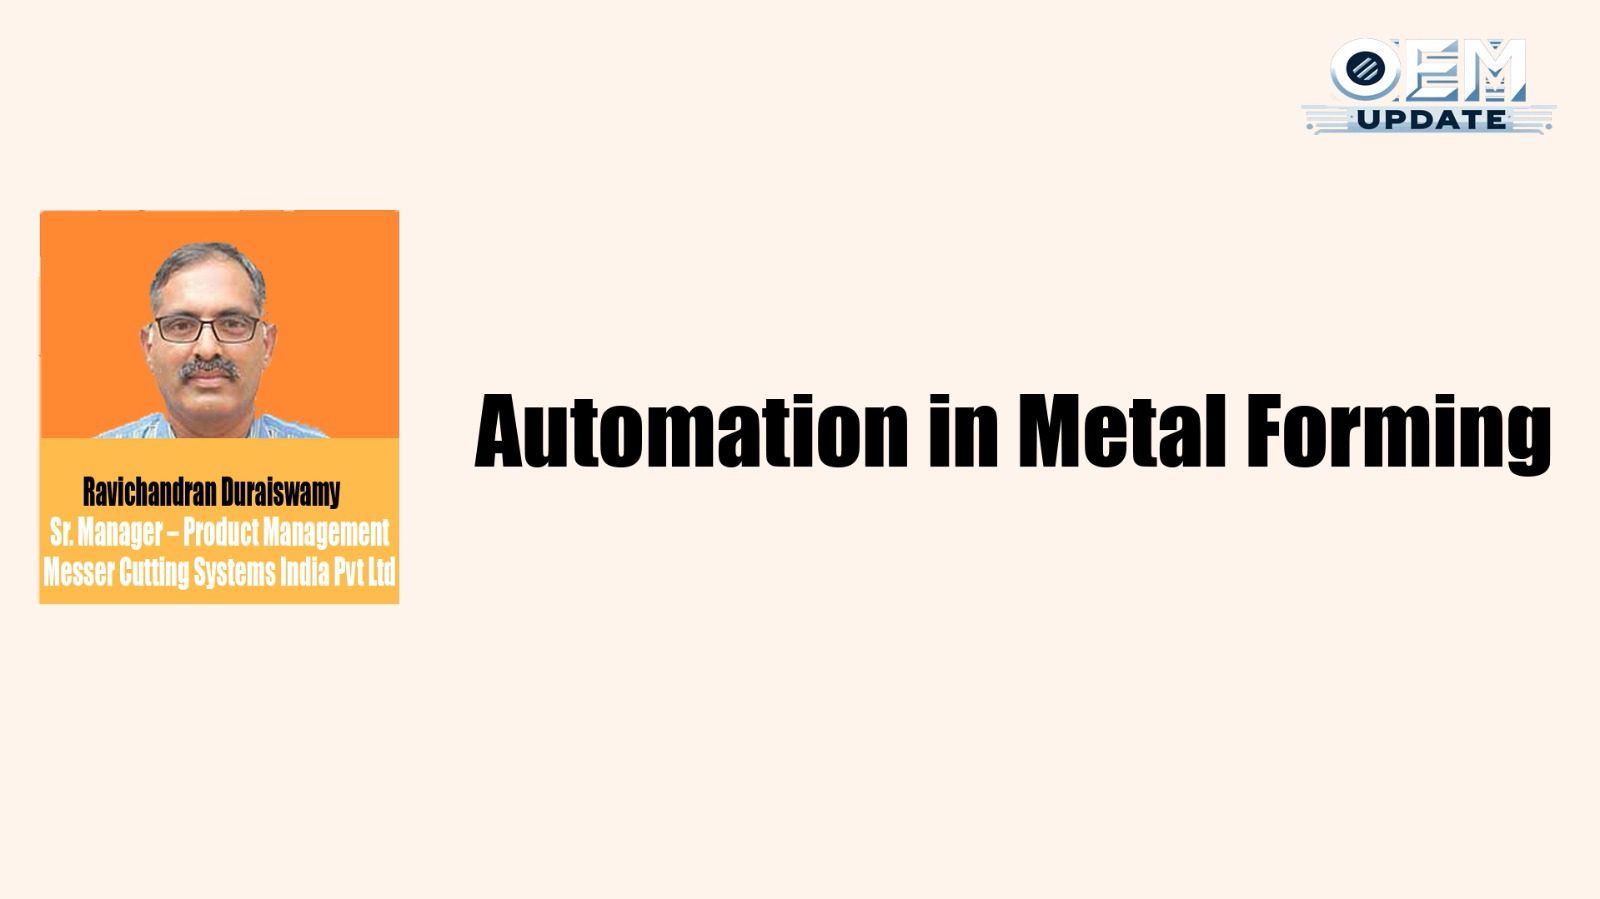 Automation in Metal Forming | Ravichandran Duraiswamy | OEM Update Magazine